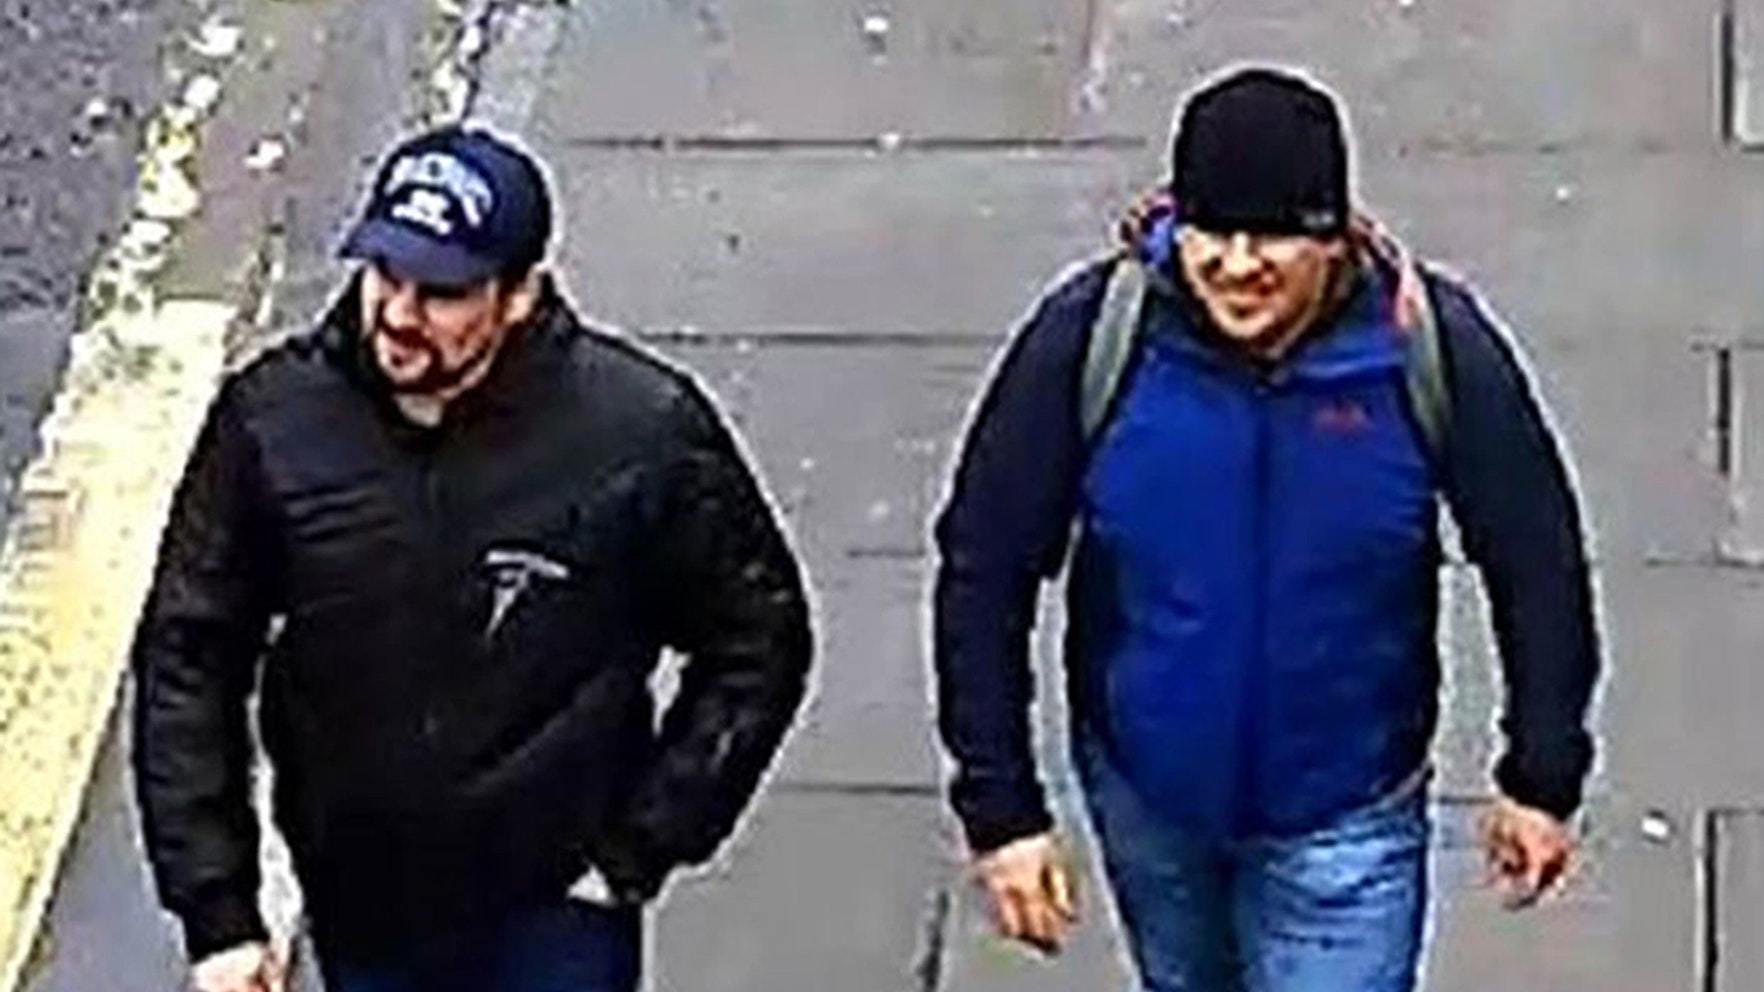 Suspects Ruslan Boshirov and Alexander Petrov